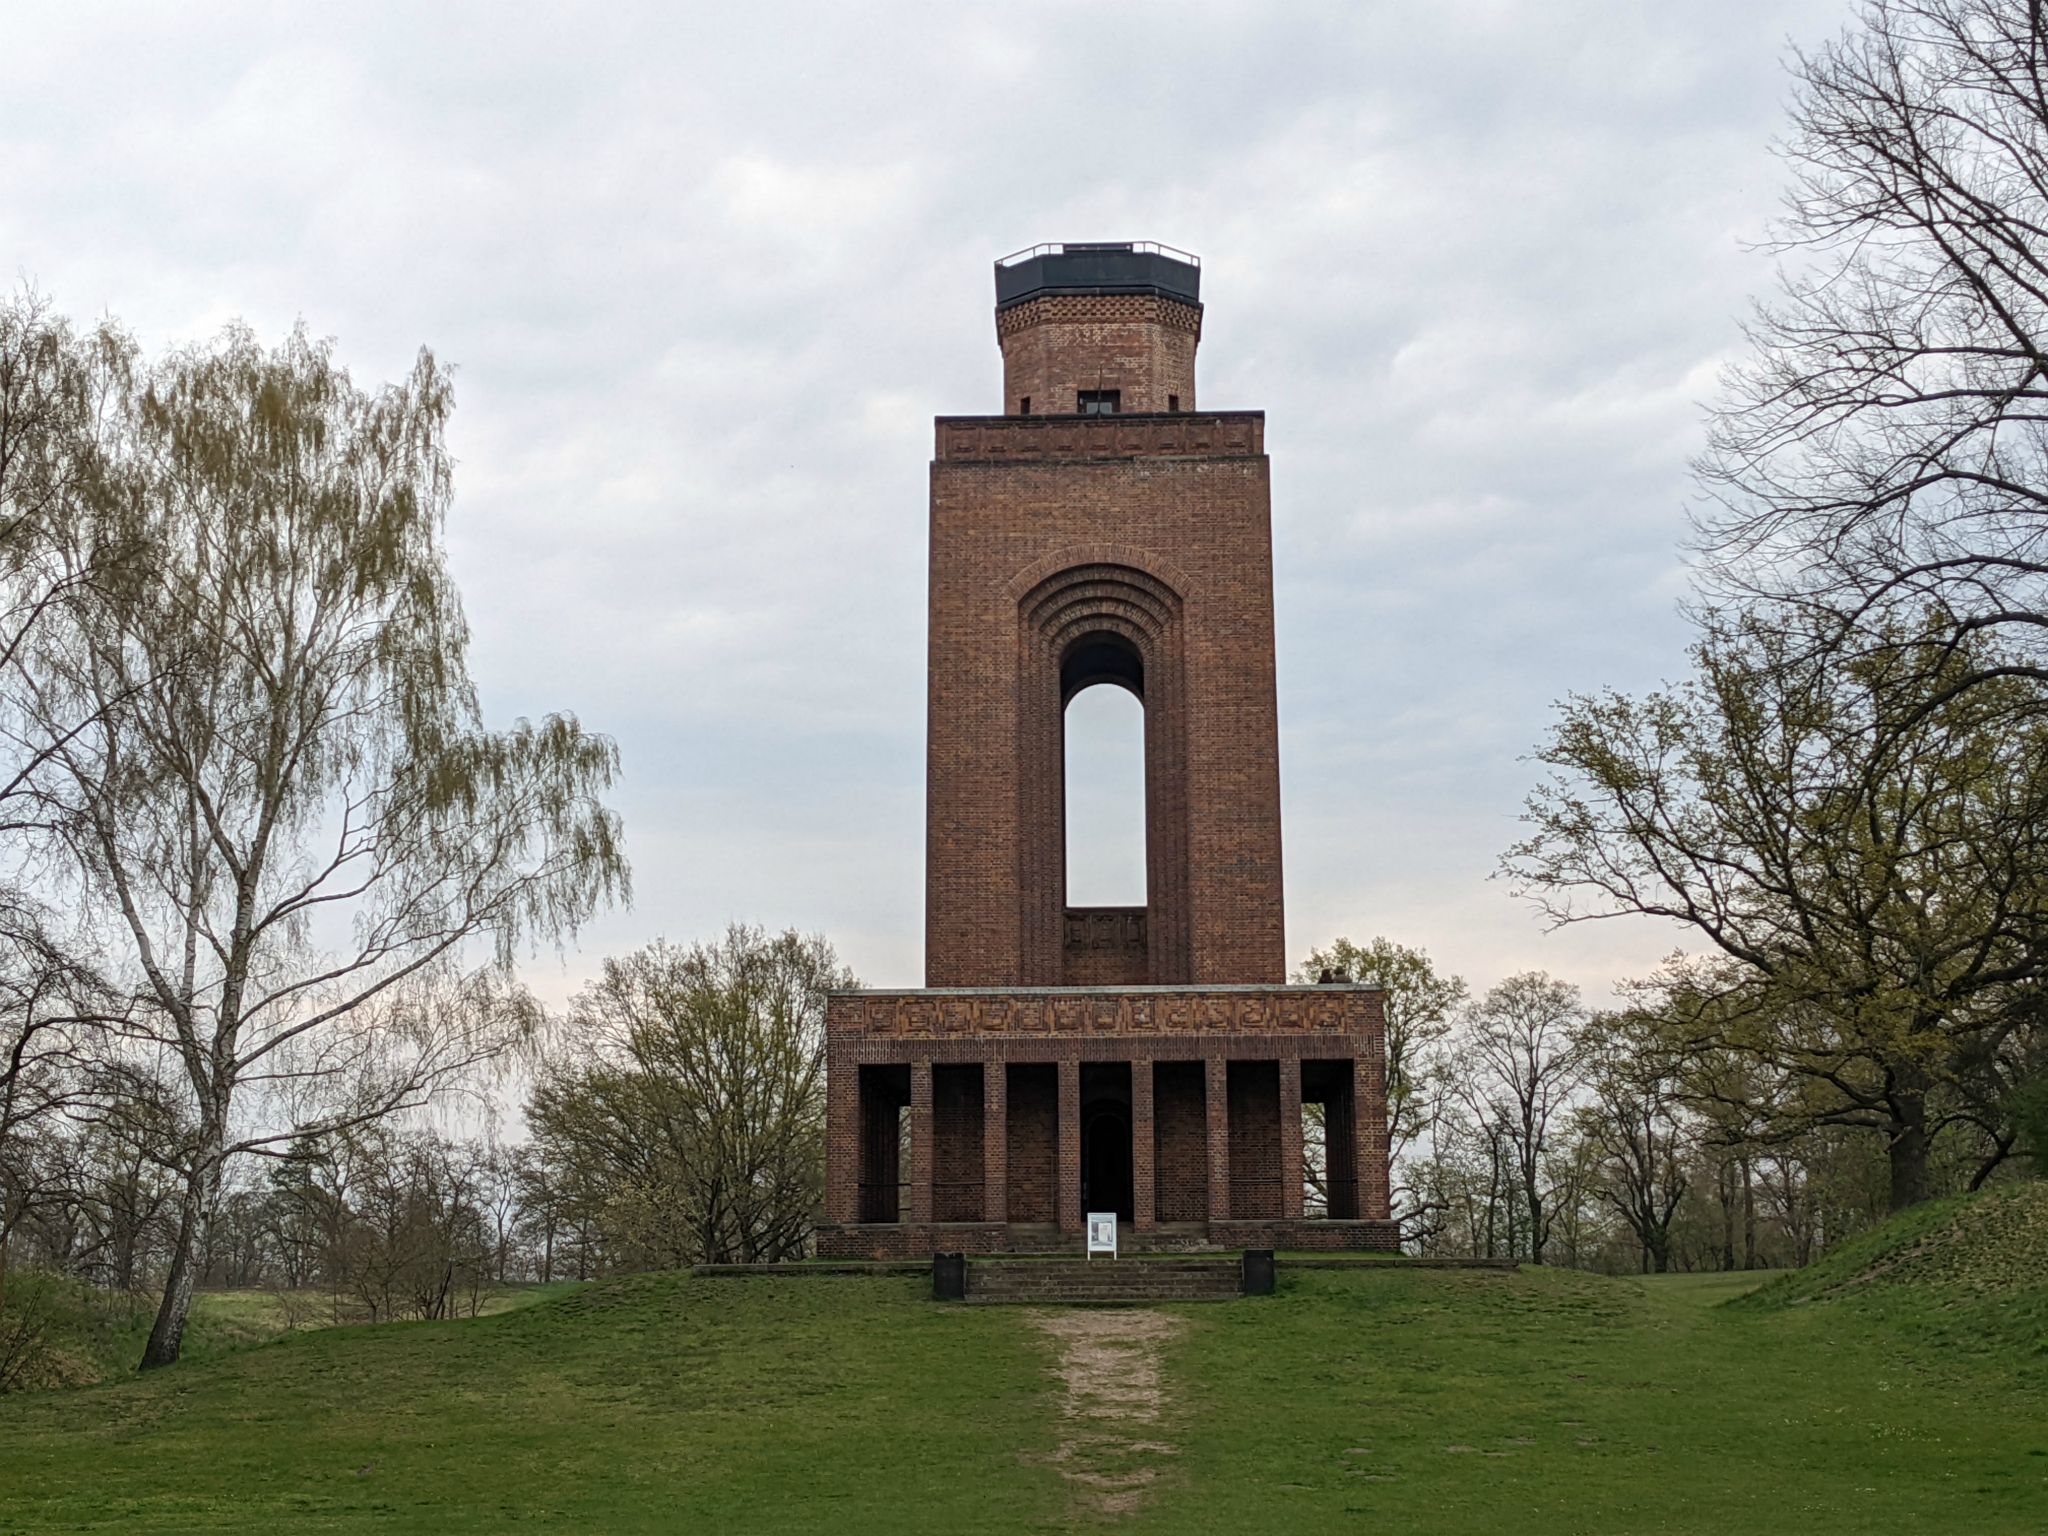 Bismarck Turm